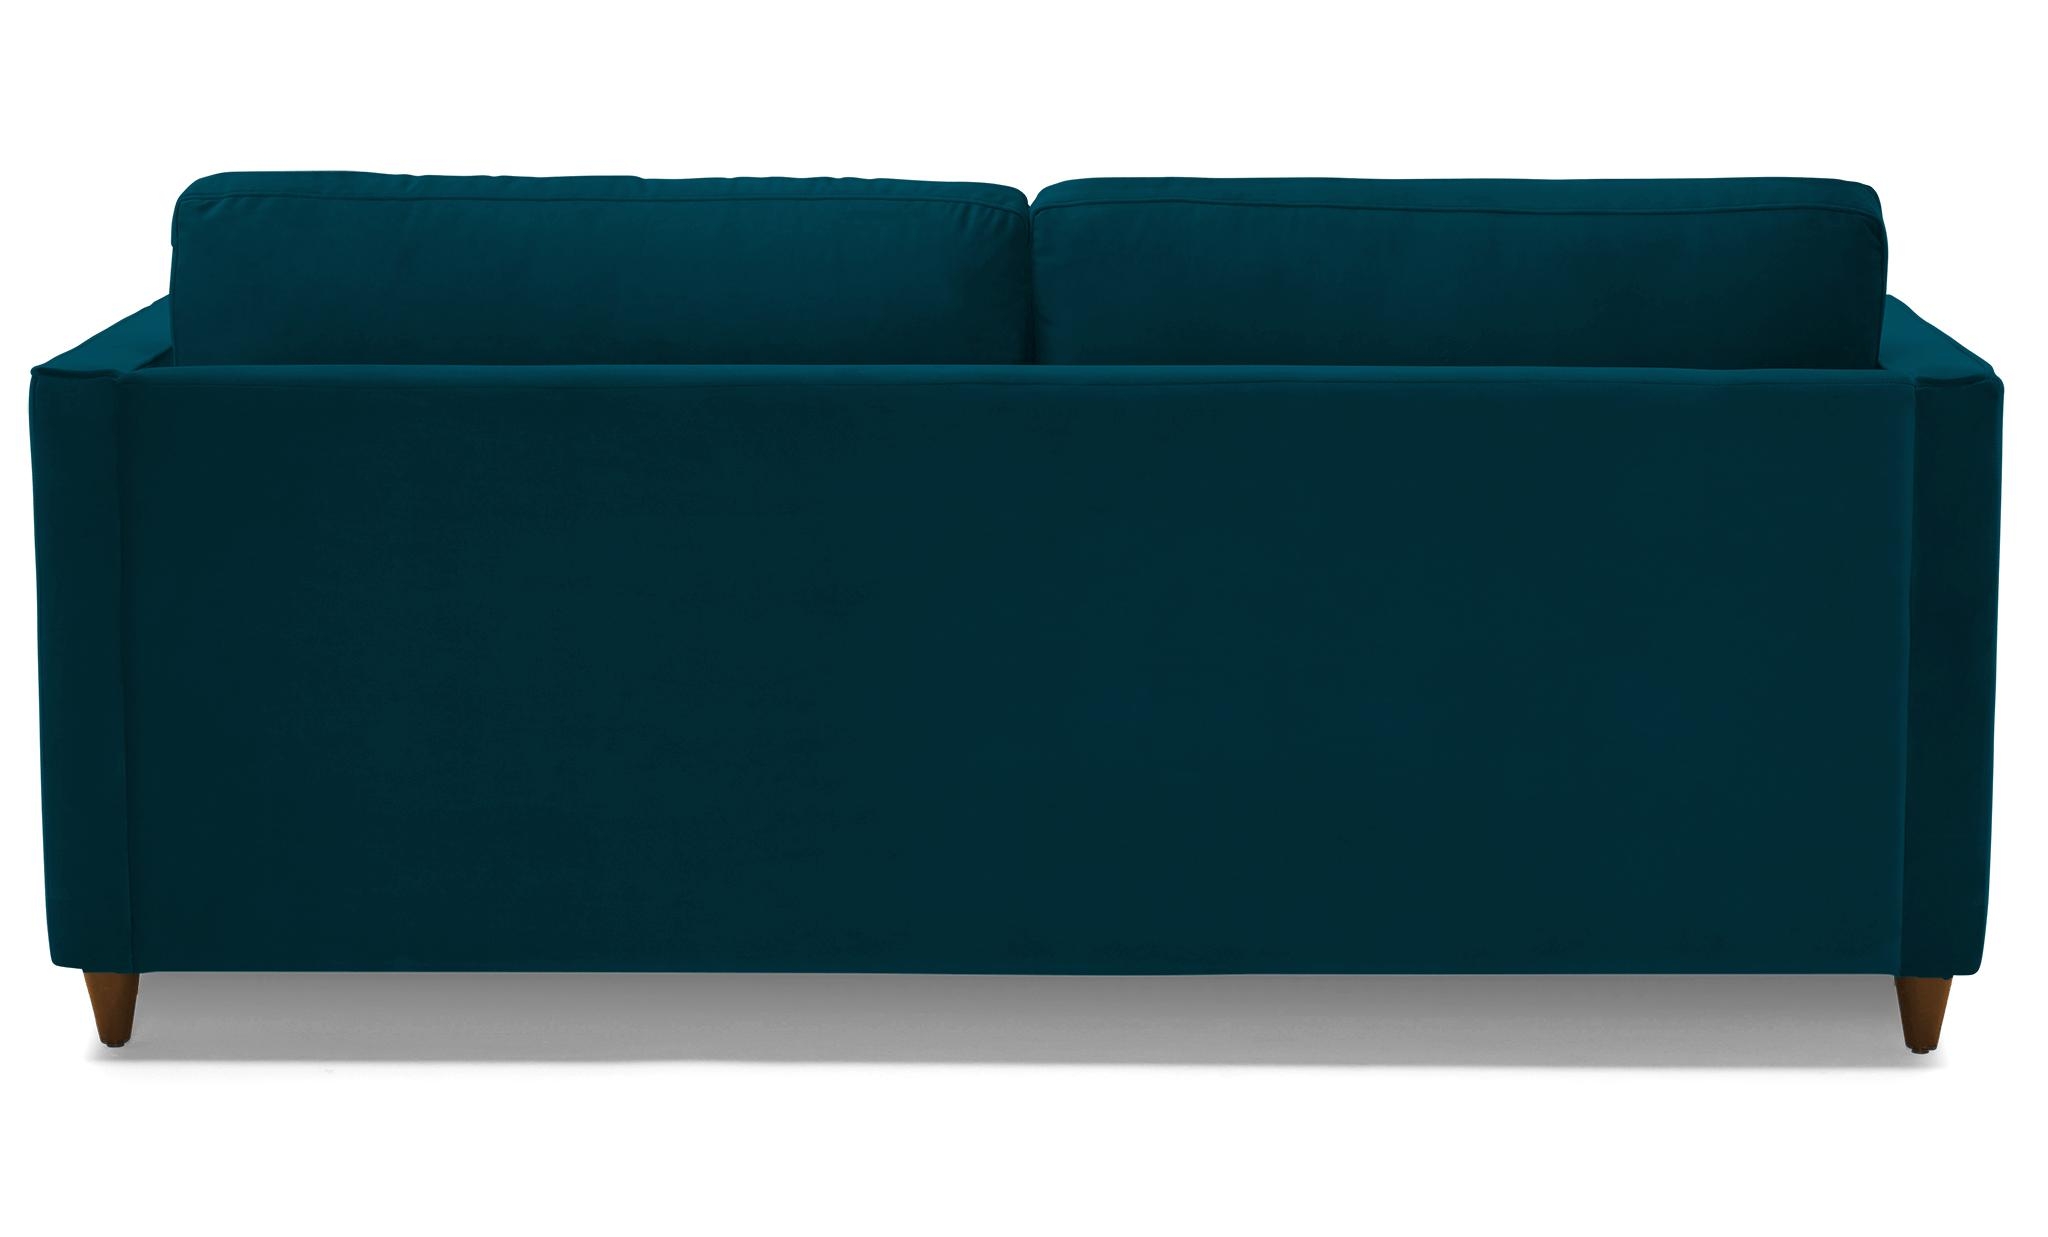 Blue Briar Mid Century Modern Sleeper Sofa - Key Largo Zenith Teal - Mocha - Image 4